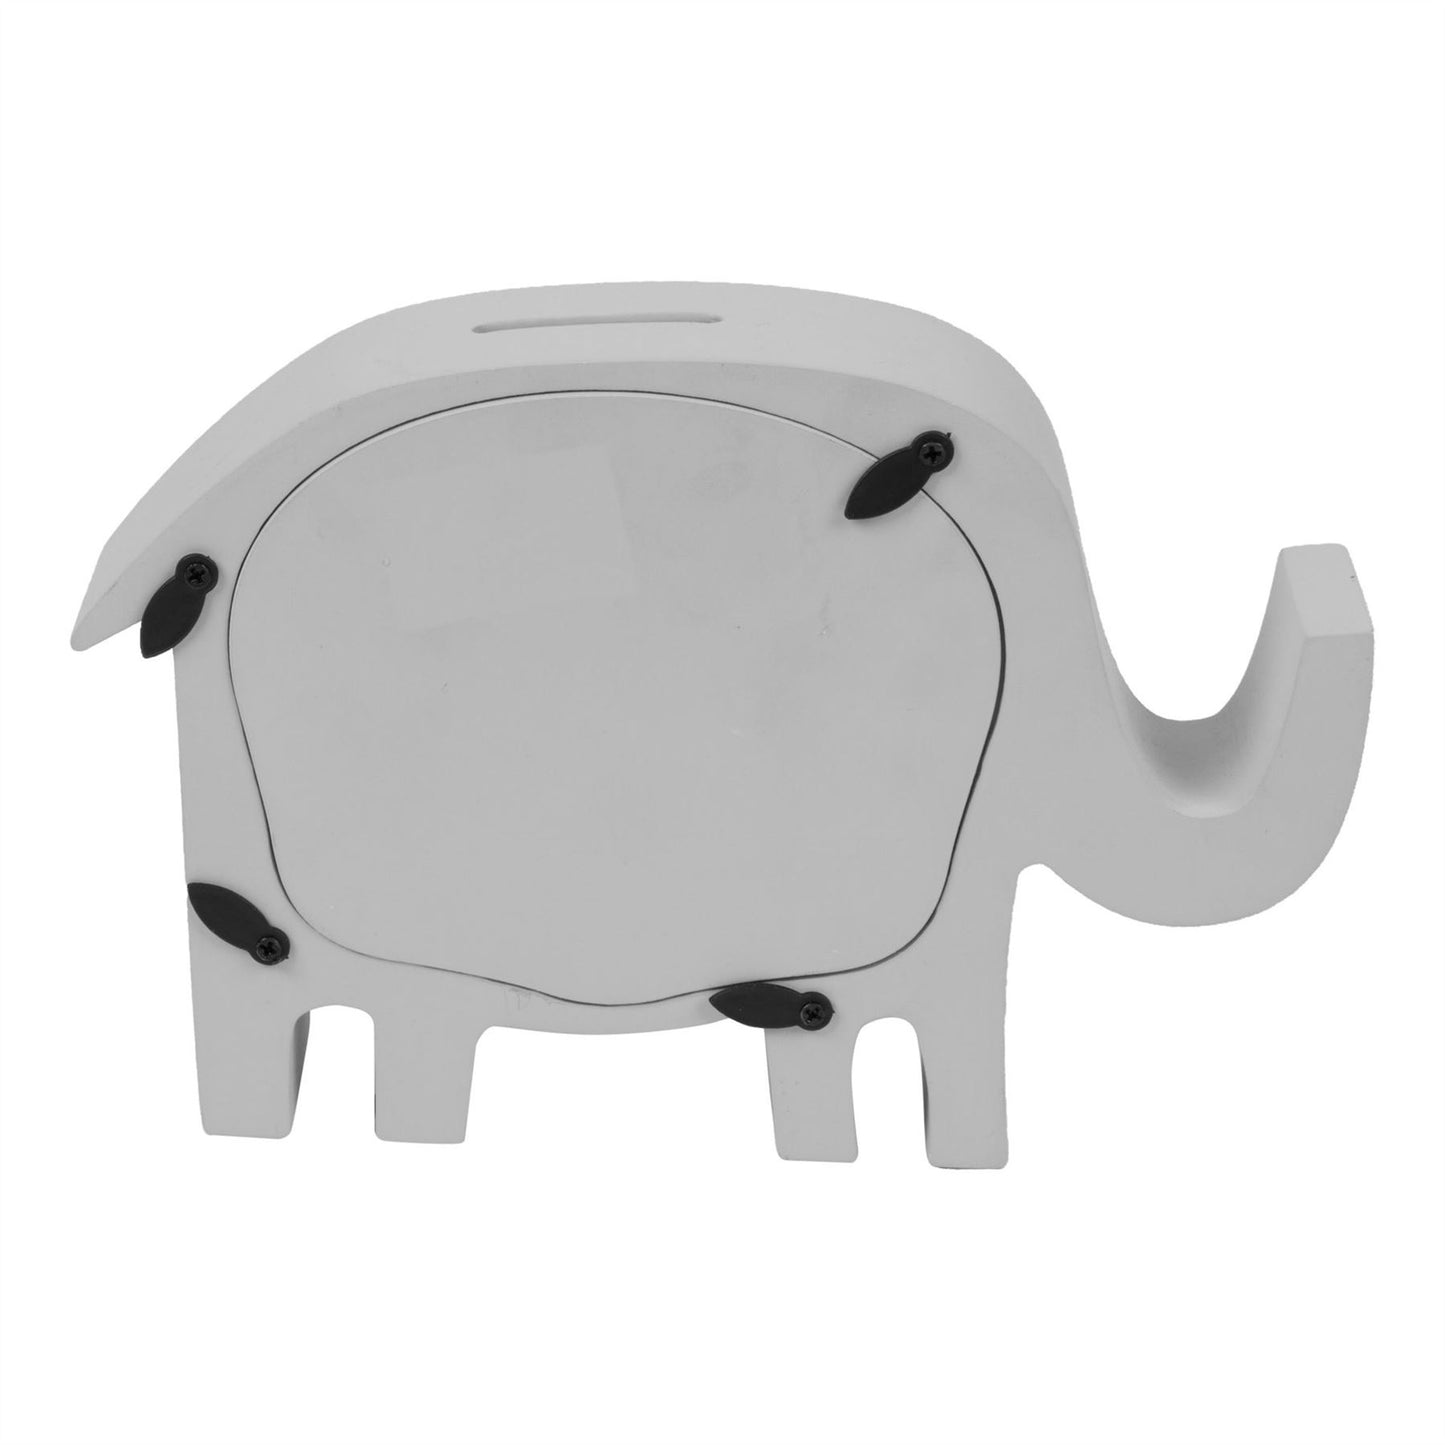 'Petit Cheri' Money Box - Elephant *(36/48)*